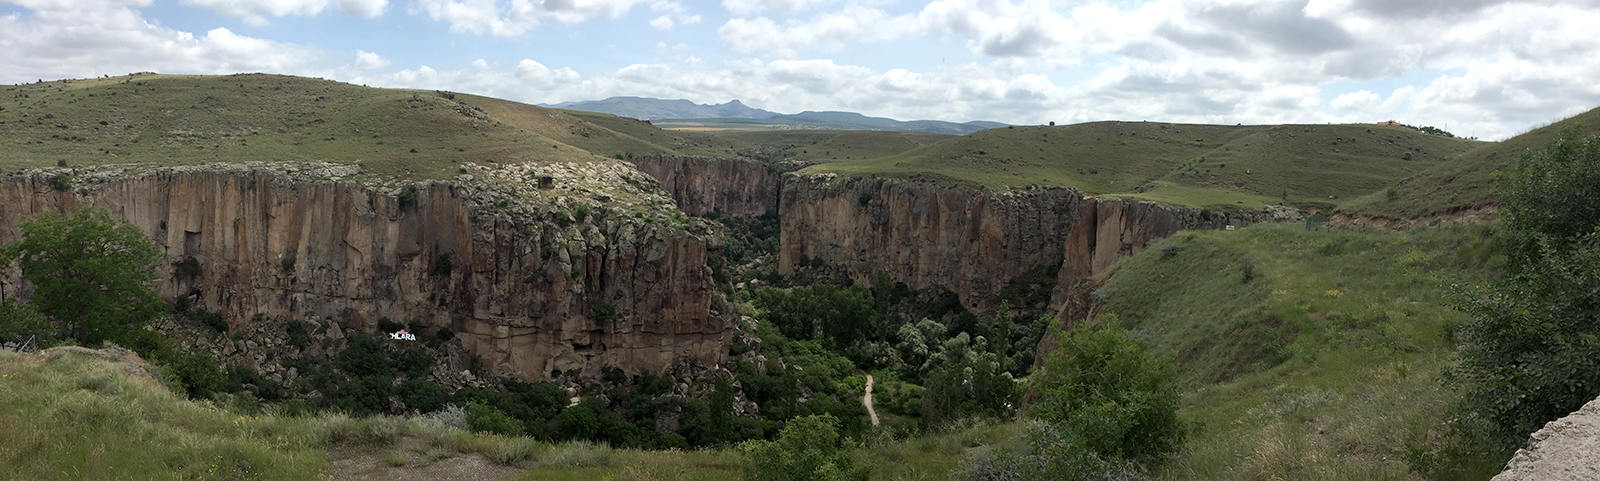 The Ihlara Valley, Cappadocia, where Yılanlı Kilise is located.